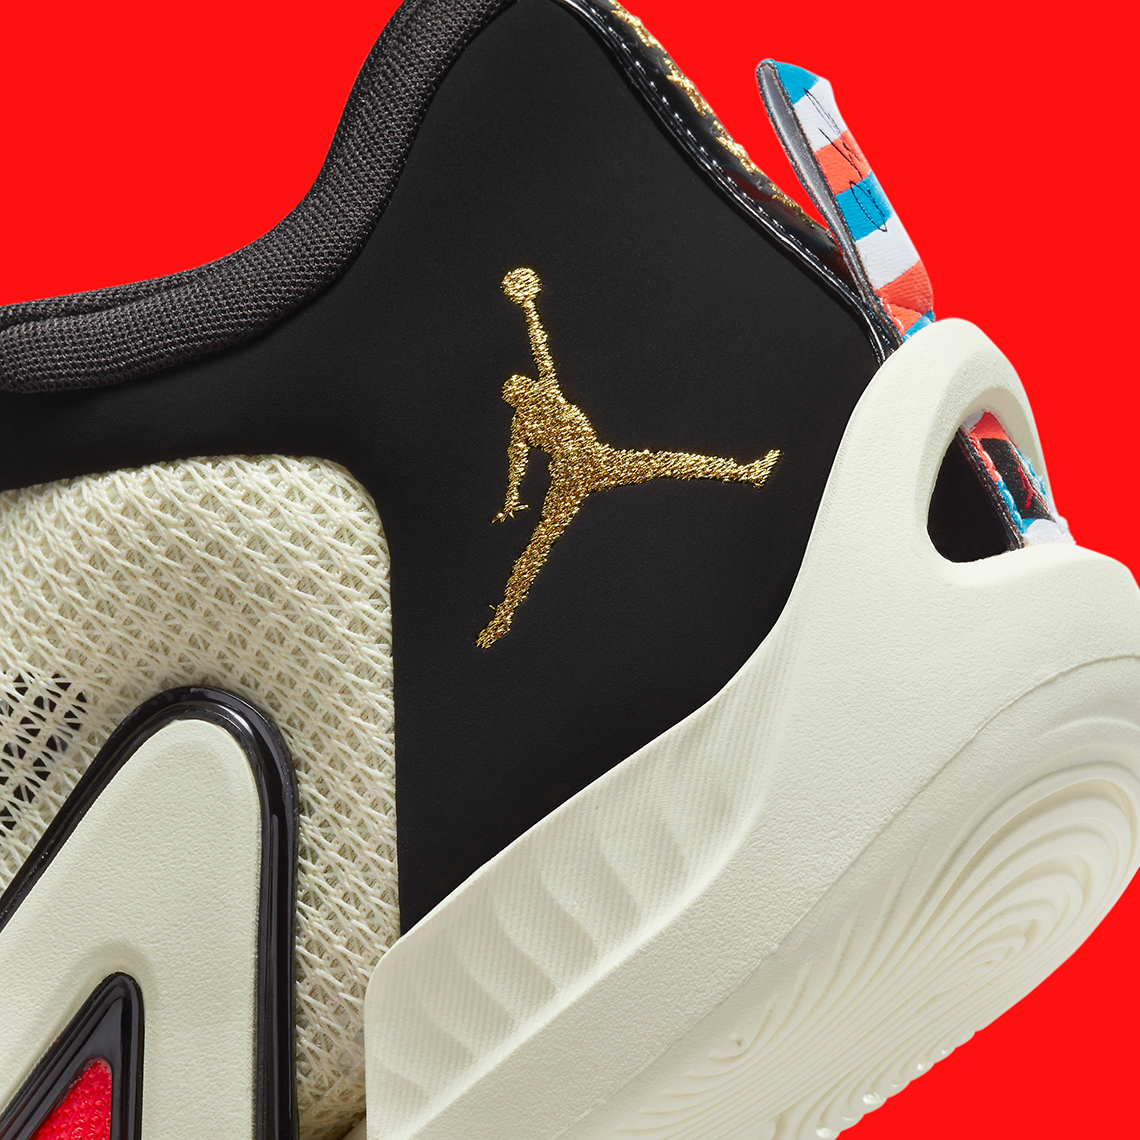 Nike Air Jordan 1 Retro High ALL STAR2016 28cm Barbershop Dx5571 180 Official Images 6